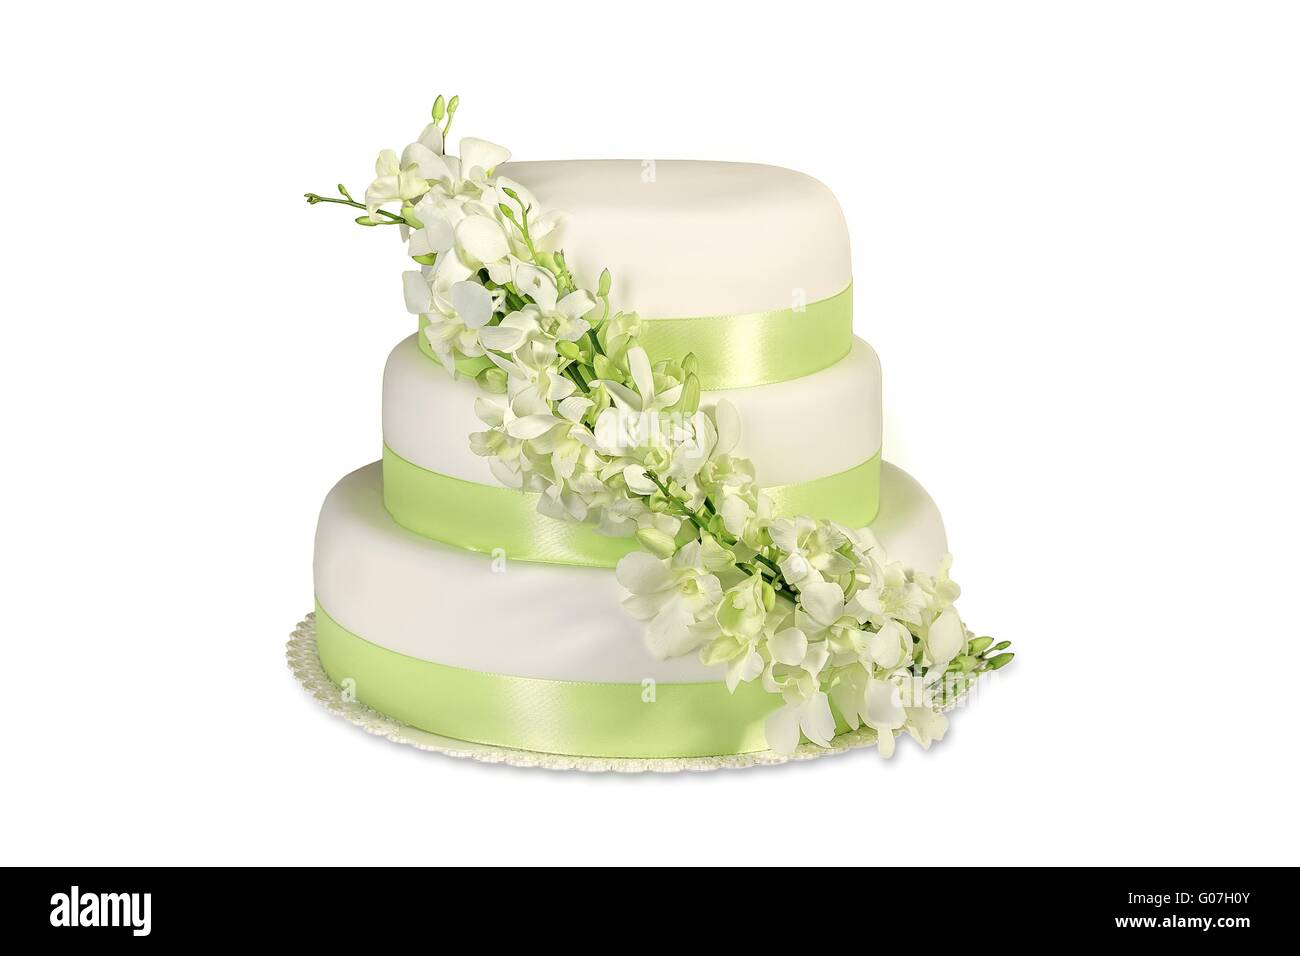 Traditional wedding cake on a white background Stock Photo